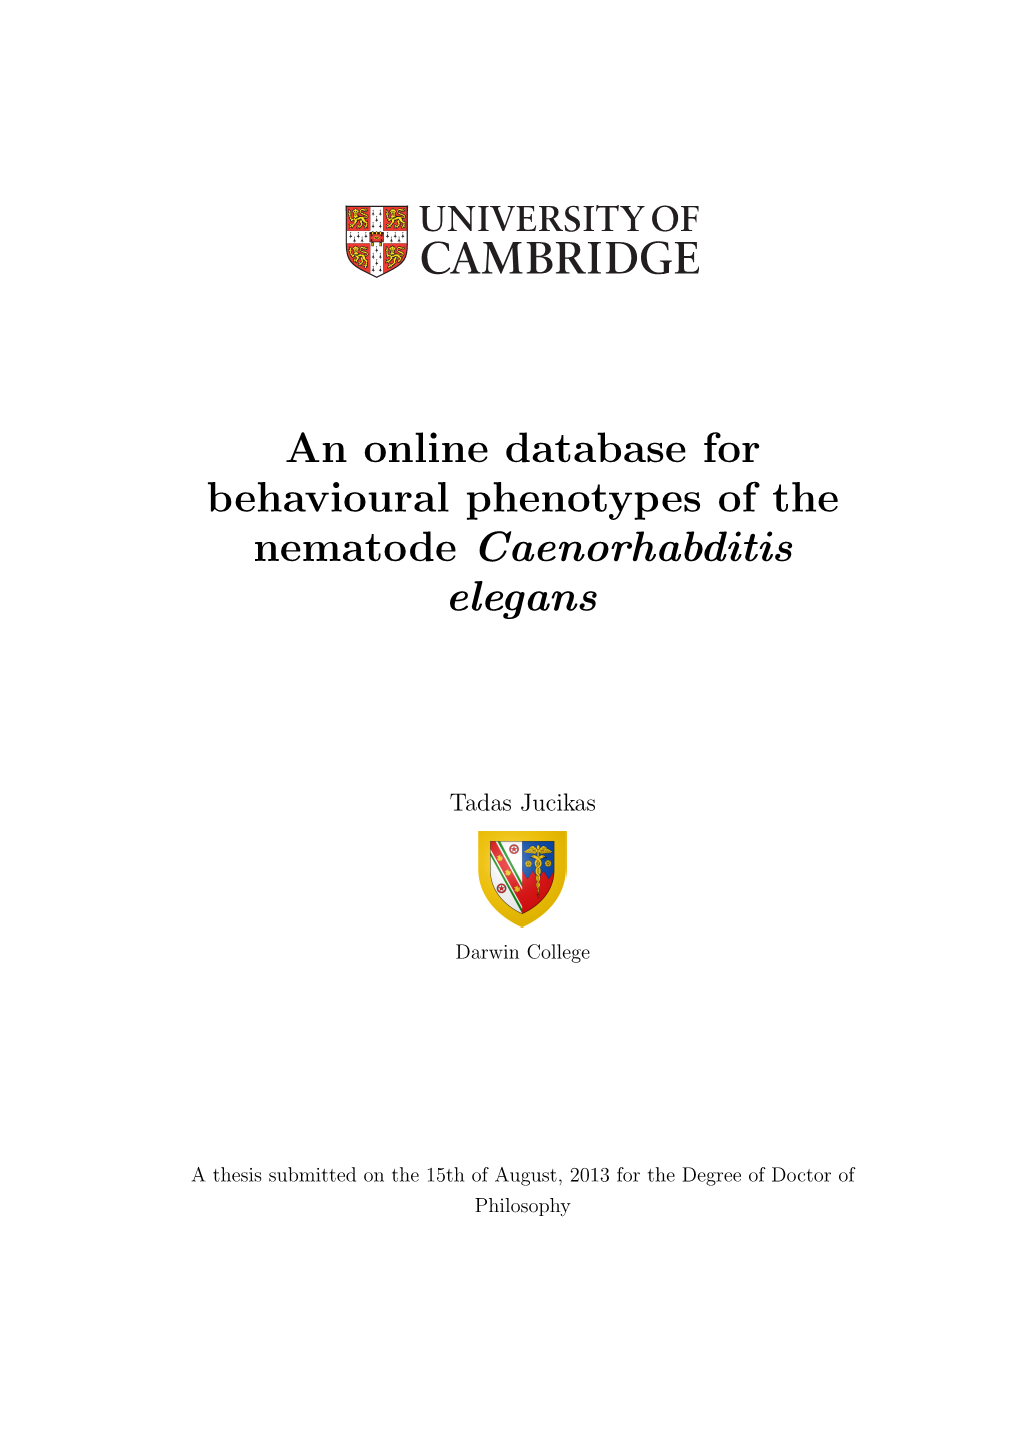 An Online Database for Behavioural Phenotypes of the Nematode Caenorhabditis Elegans